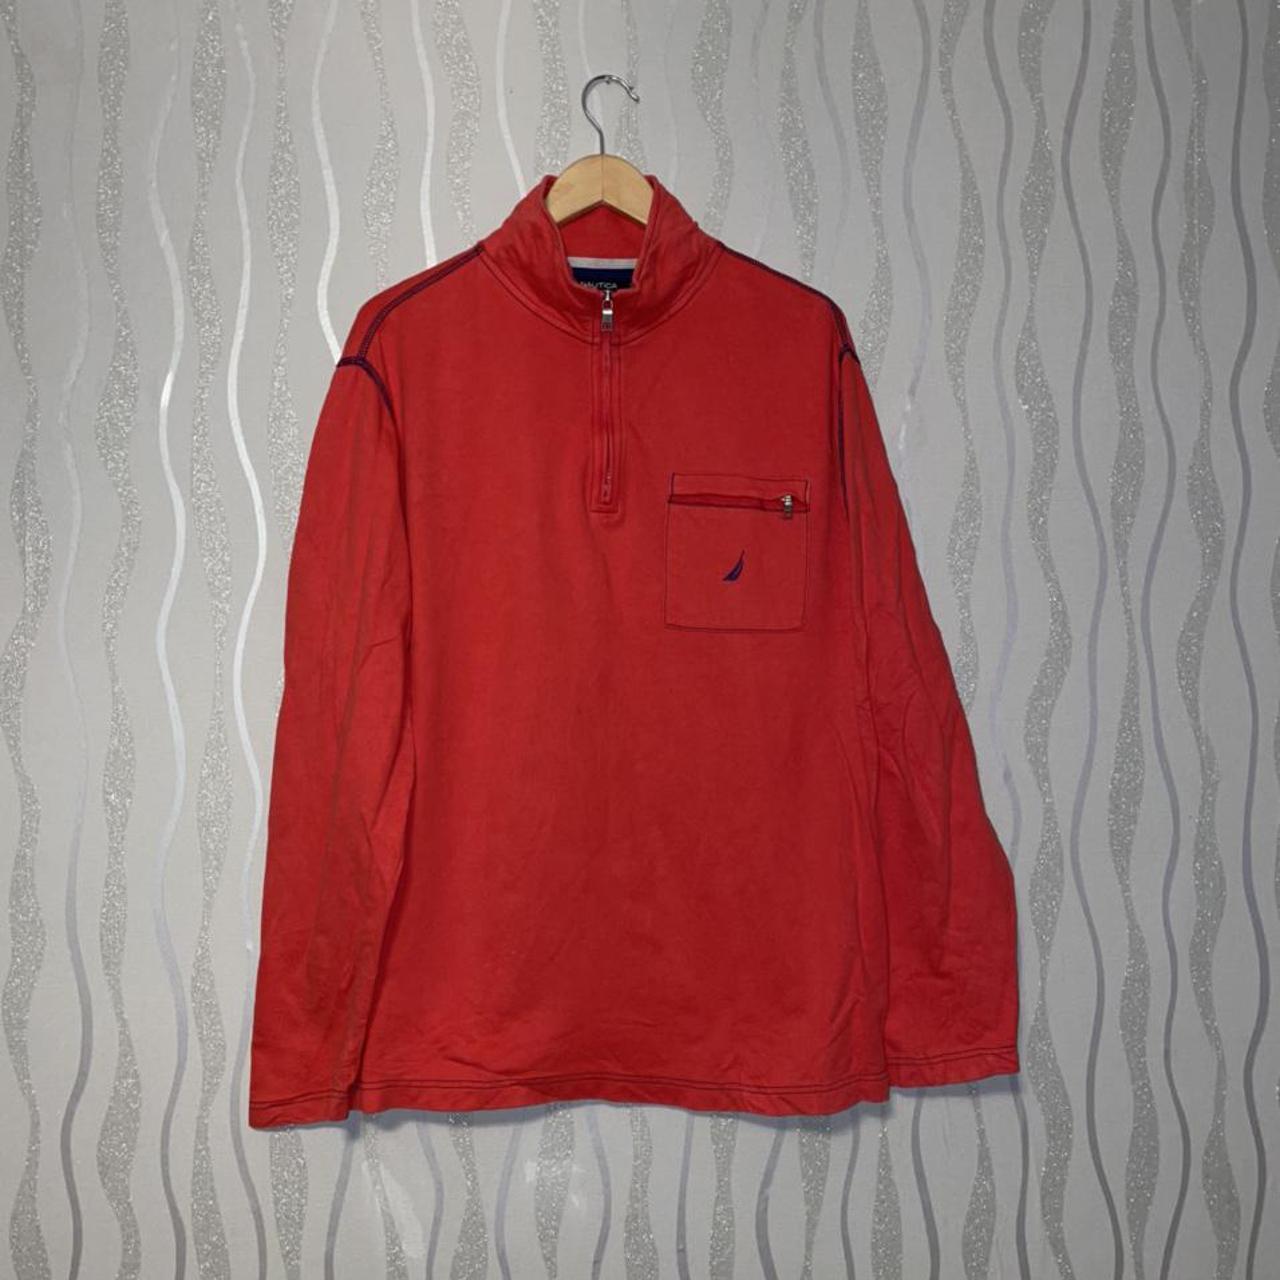 Nautica quarter zip jumper Colour: red Size on... - Depop